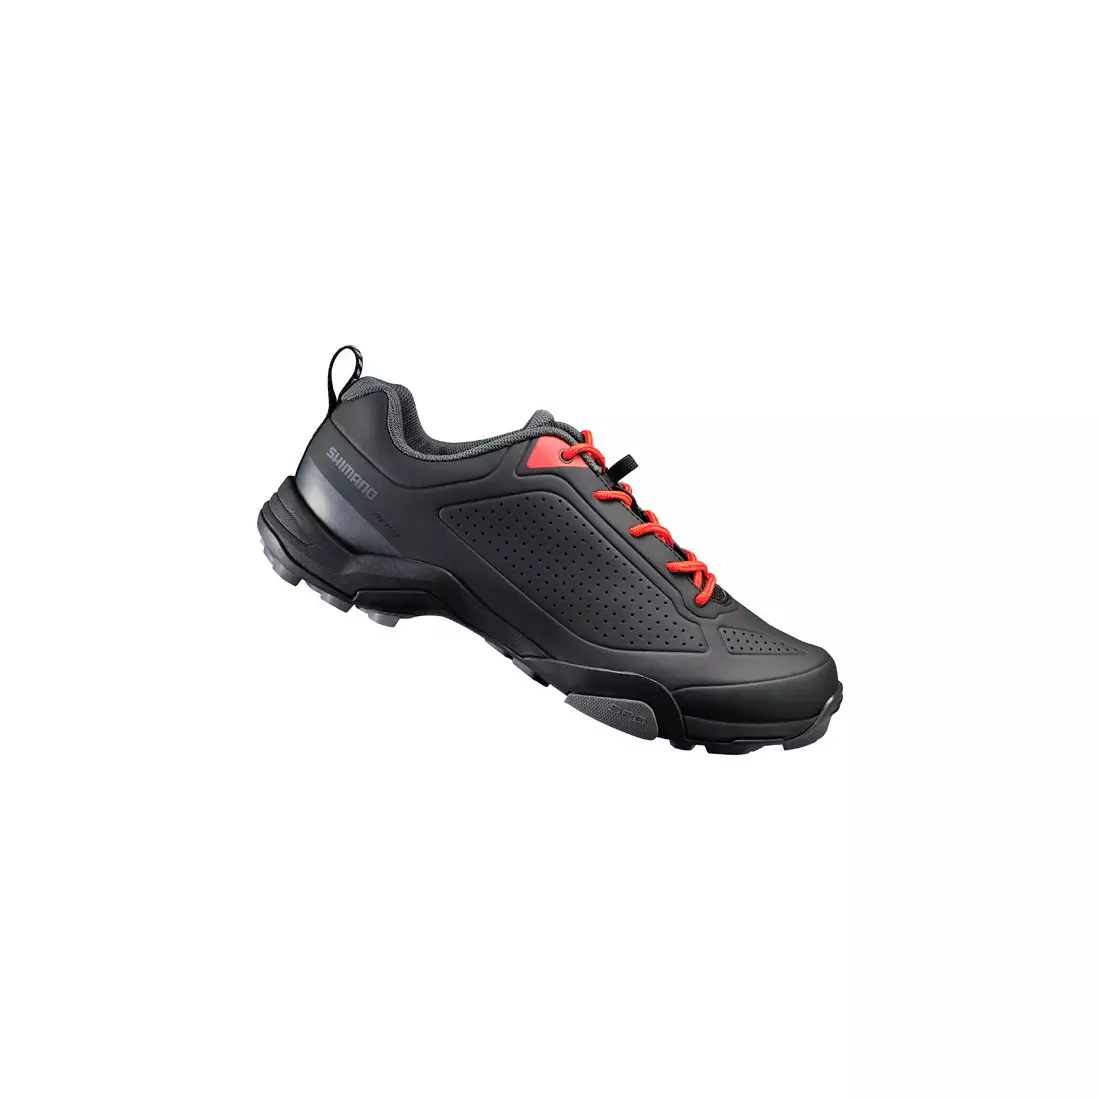 SHIMANO SH-MT300 - men's trekking cycling shoes, color: Black